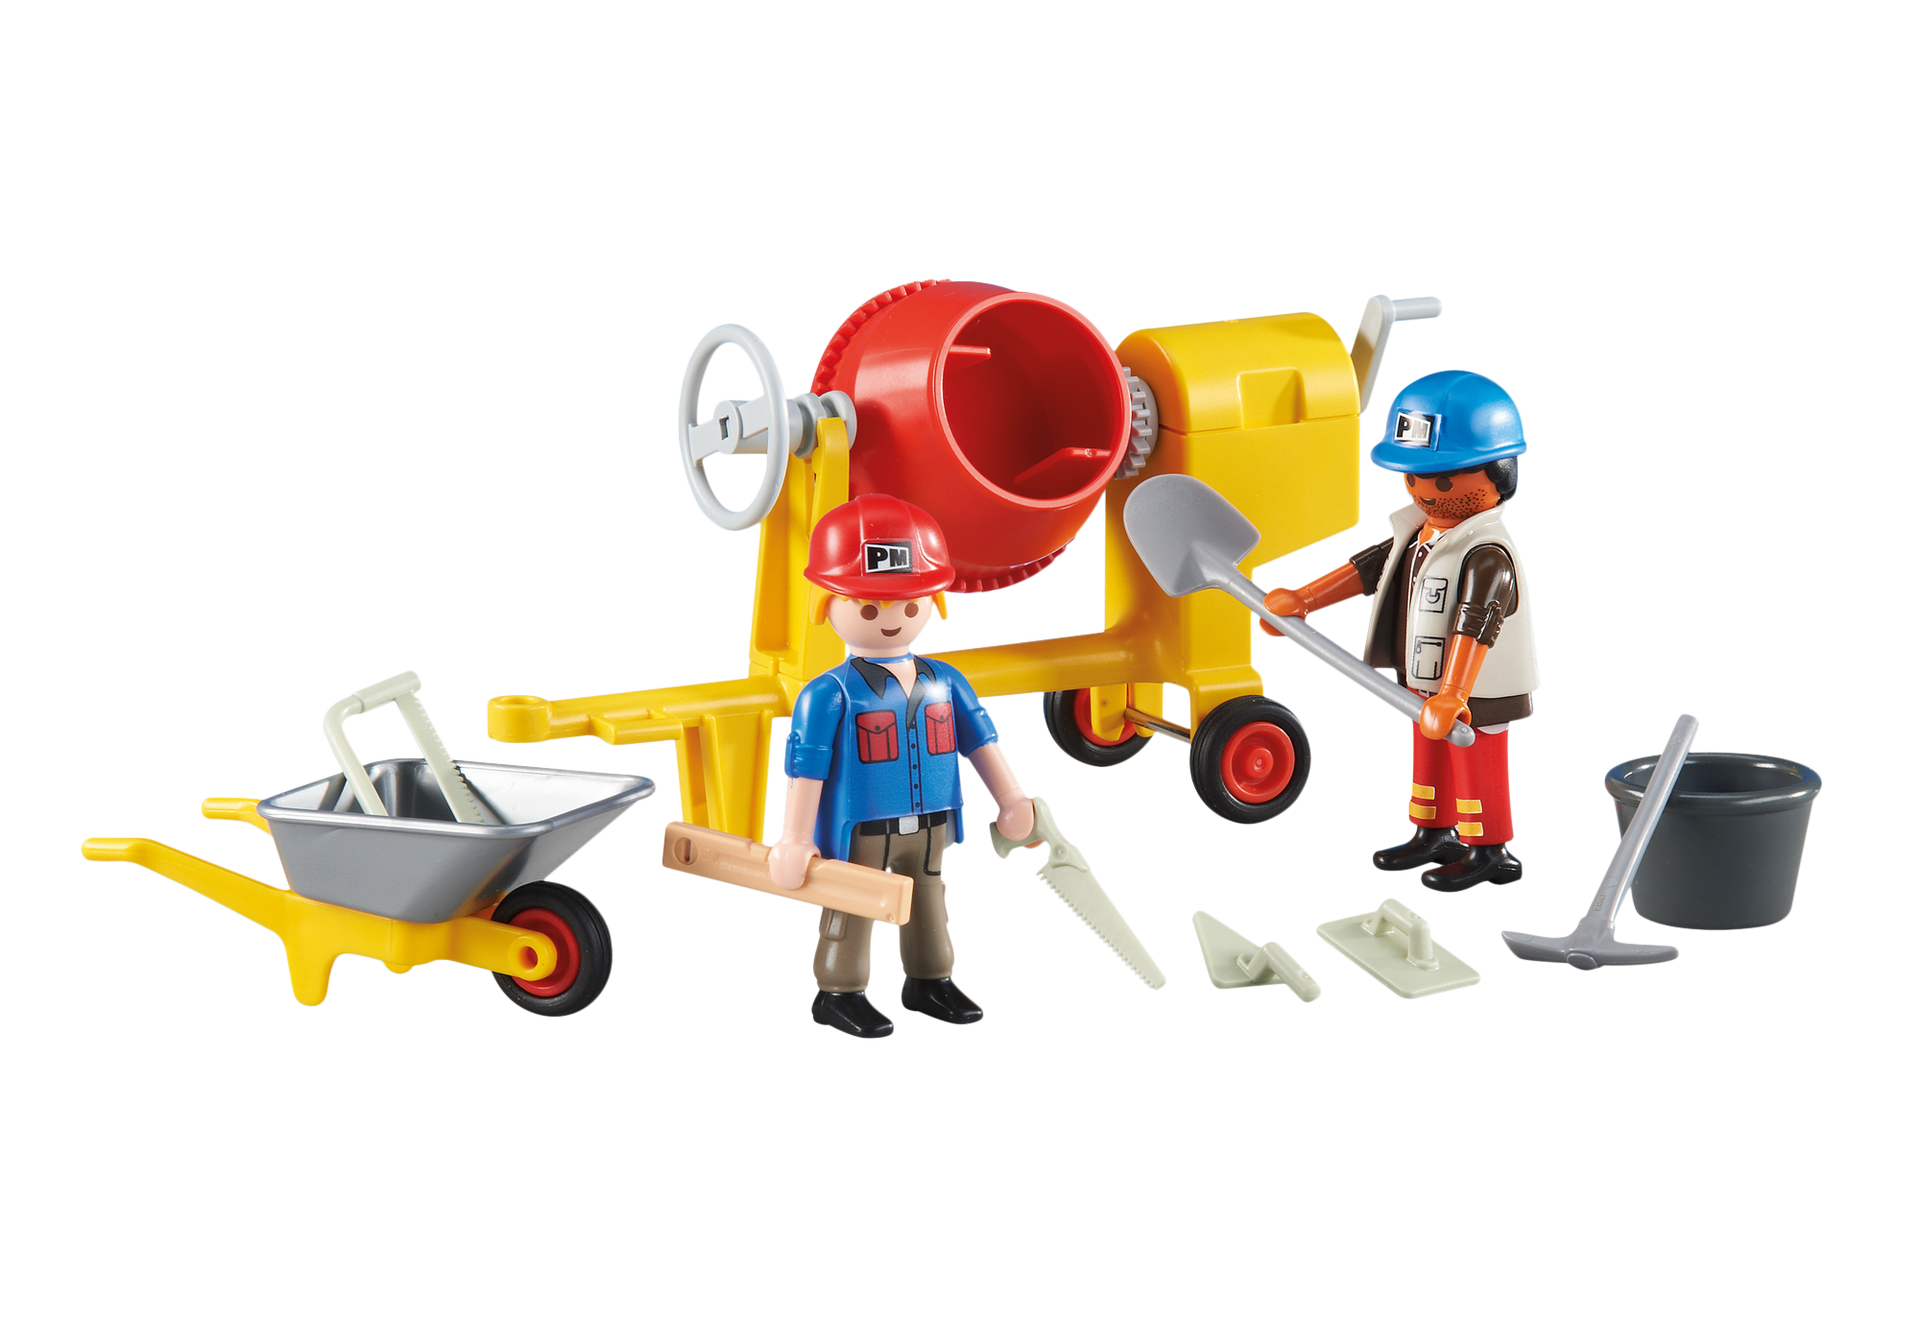 Playmobil TROMMEL Betonmischer Zementmischer Baustelle Bauarbeiter 3759 4905 